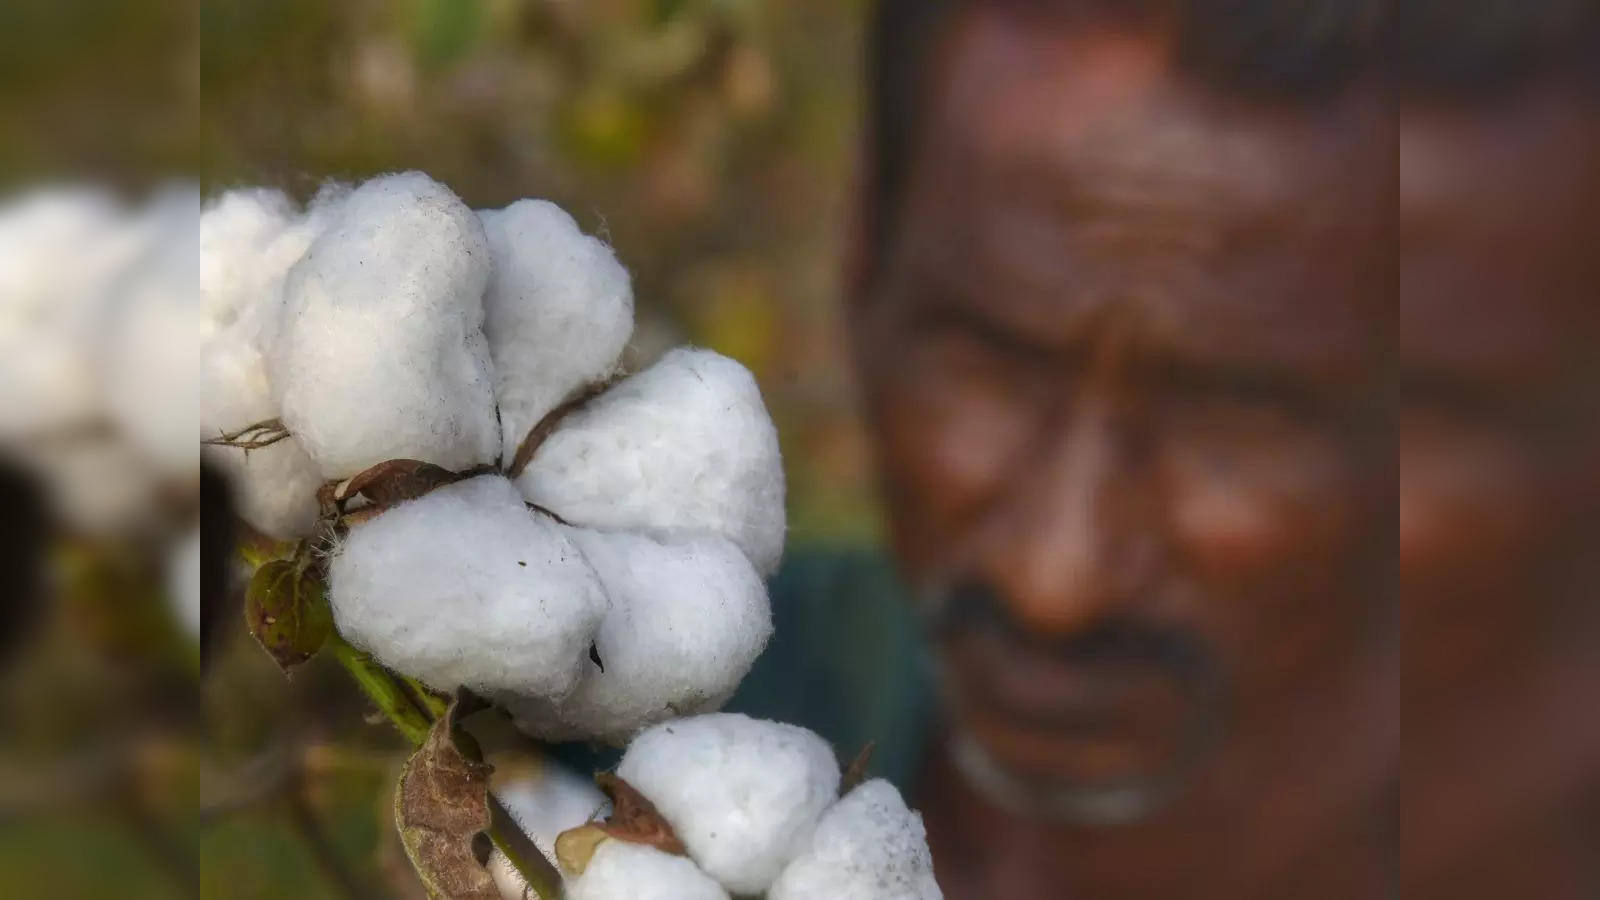 Cotton production: ET explainer: Status of India's pilot to boost cotton  yield - The Economic Times